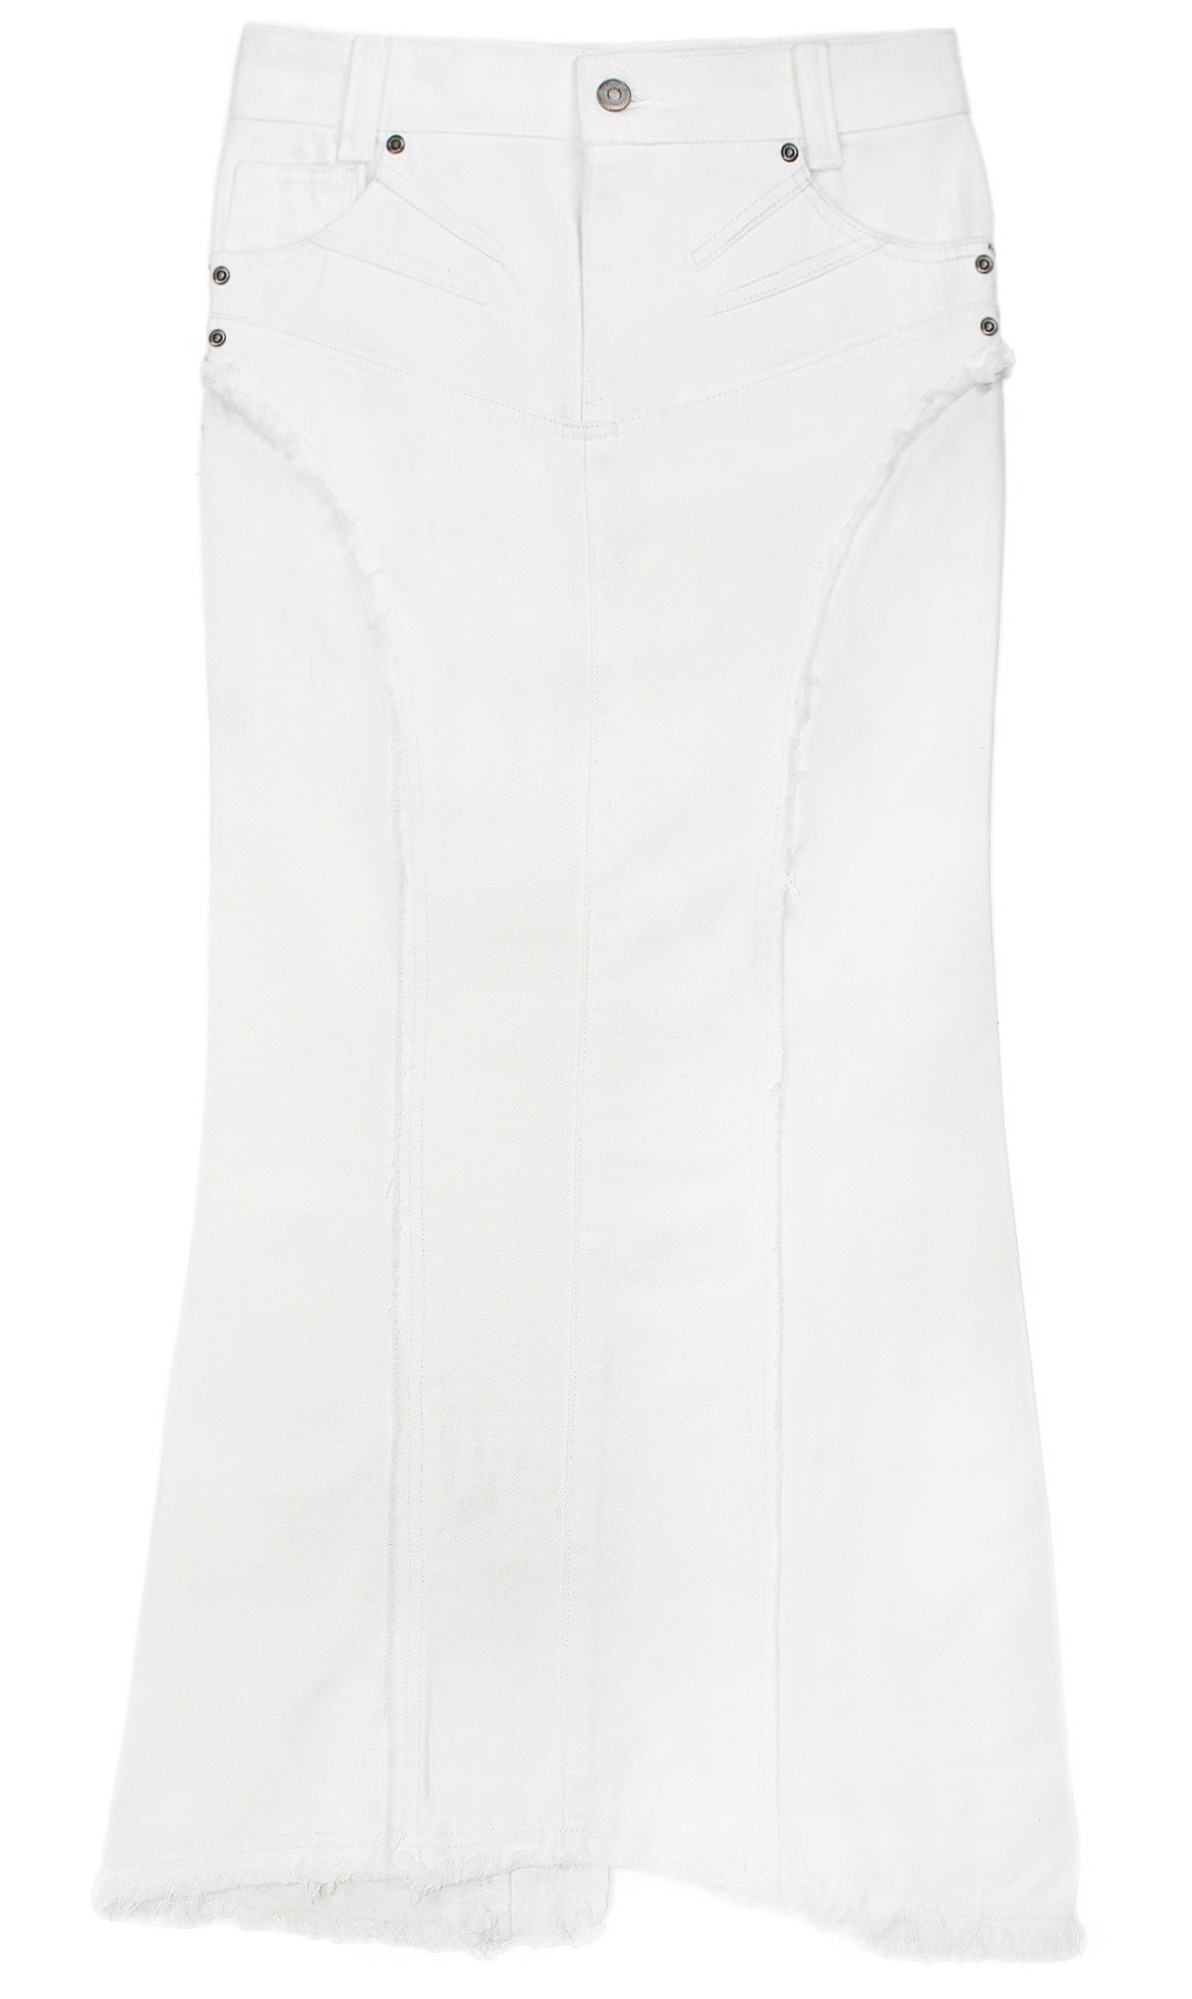 Washed denim skirt (White)